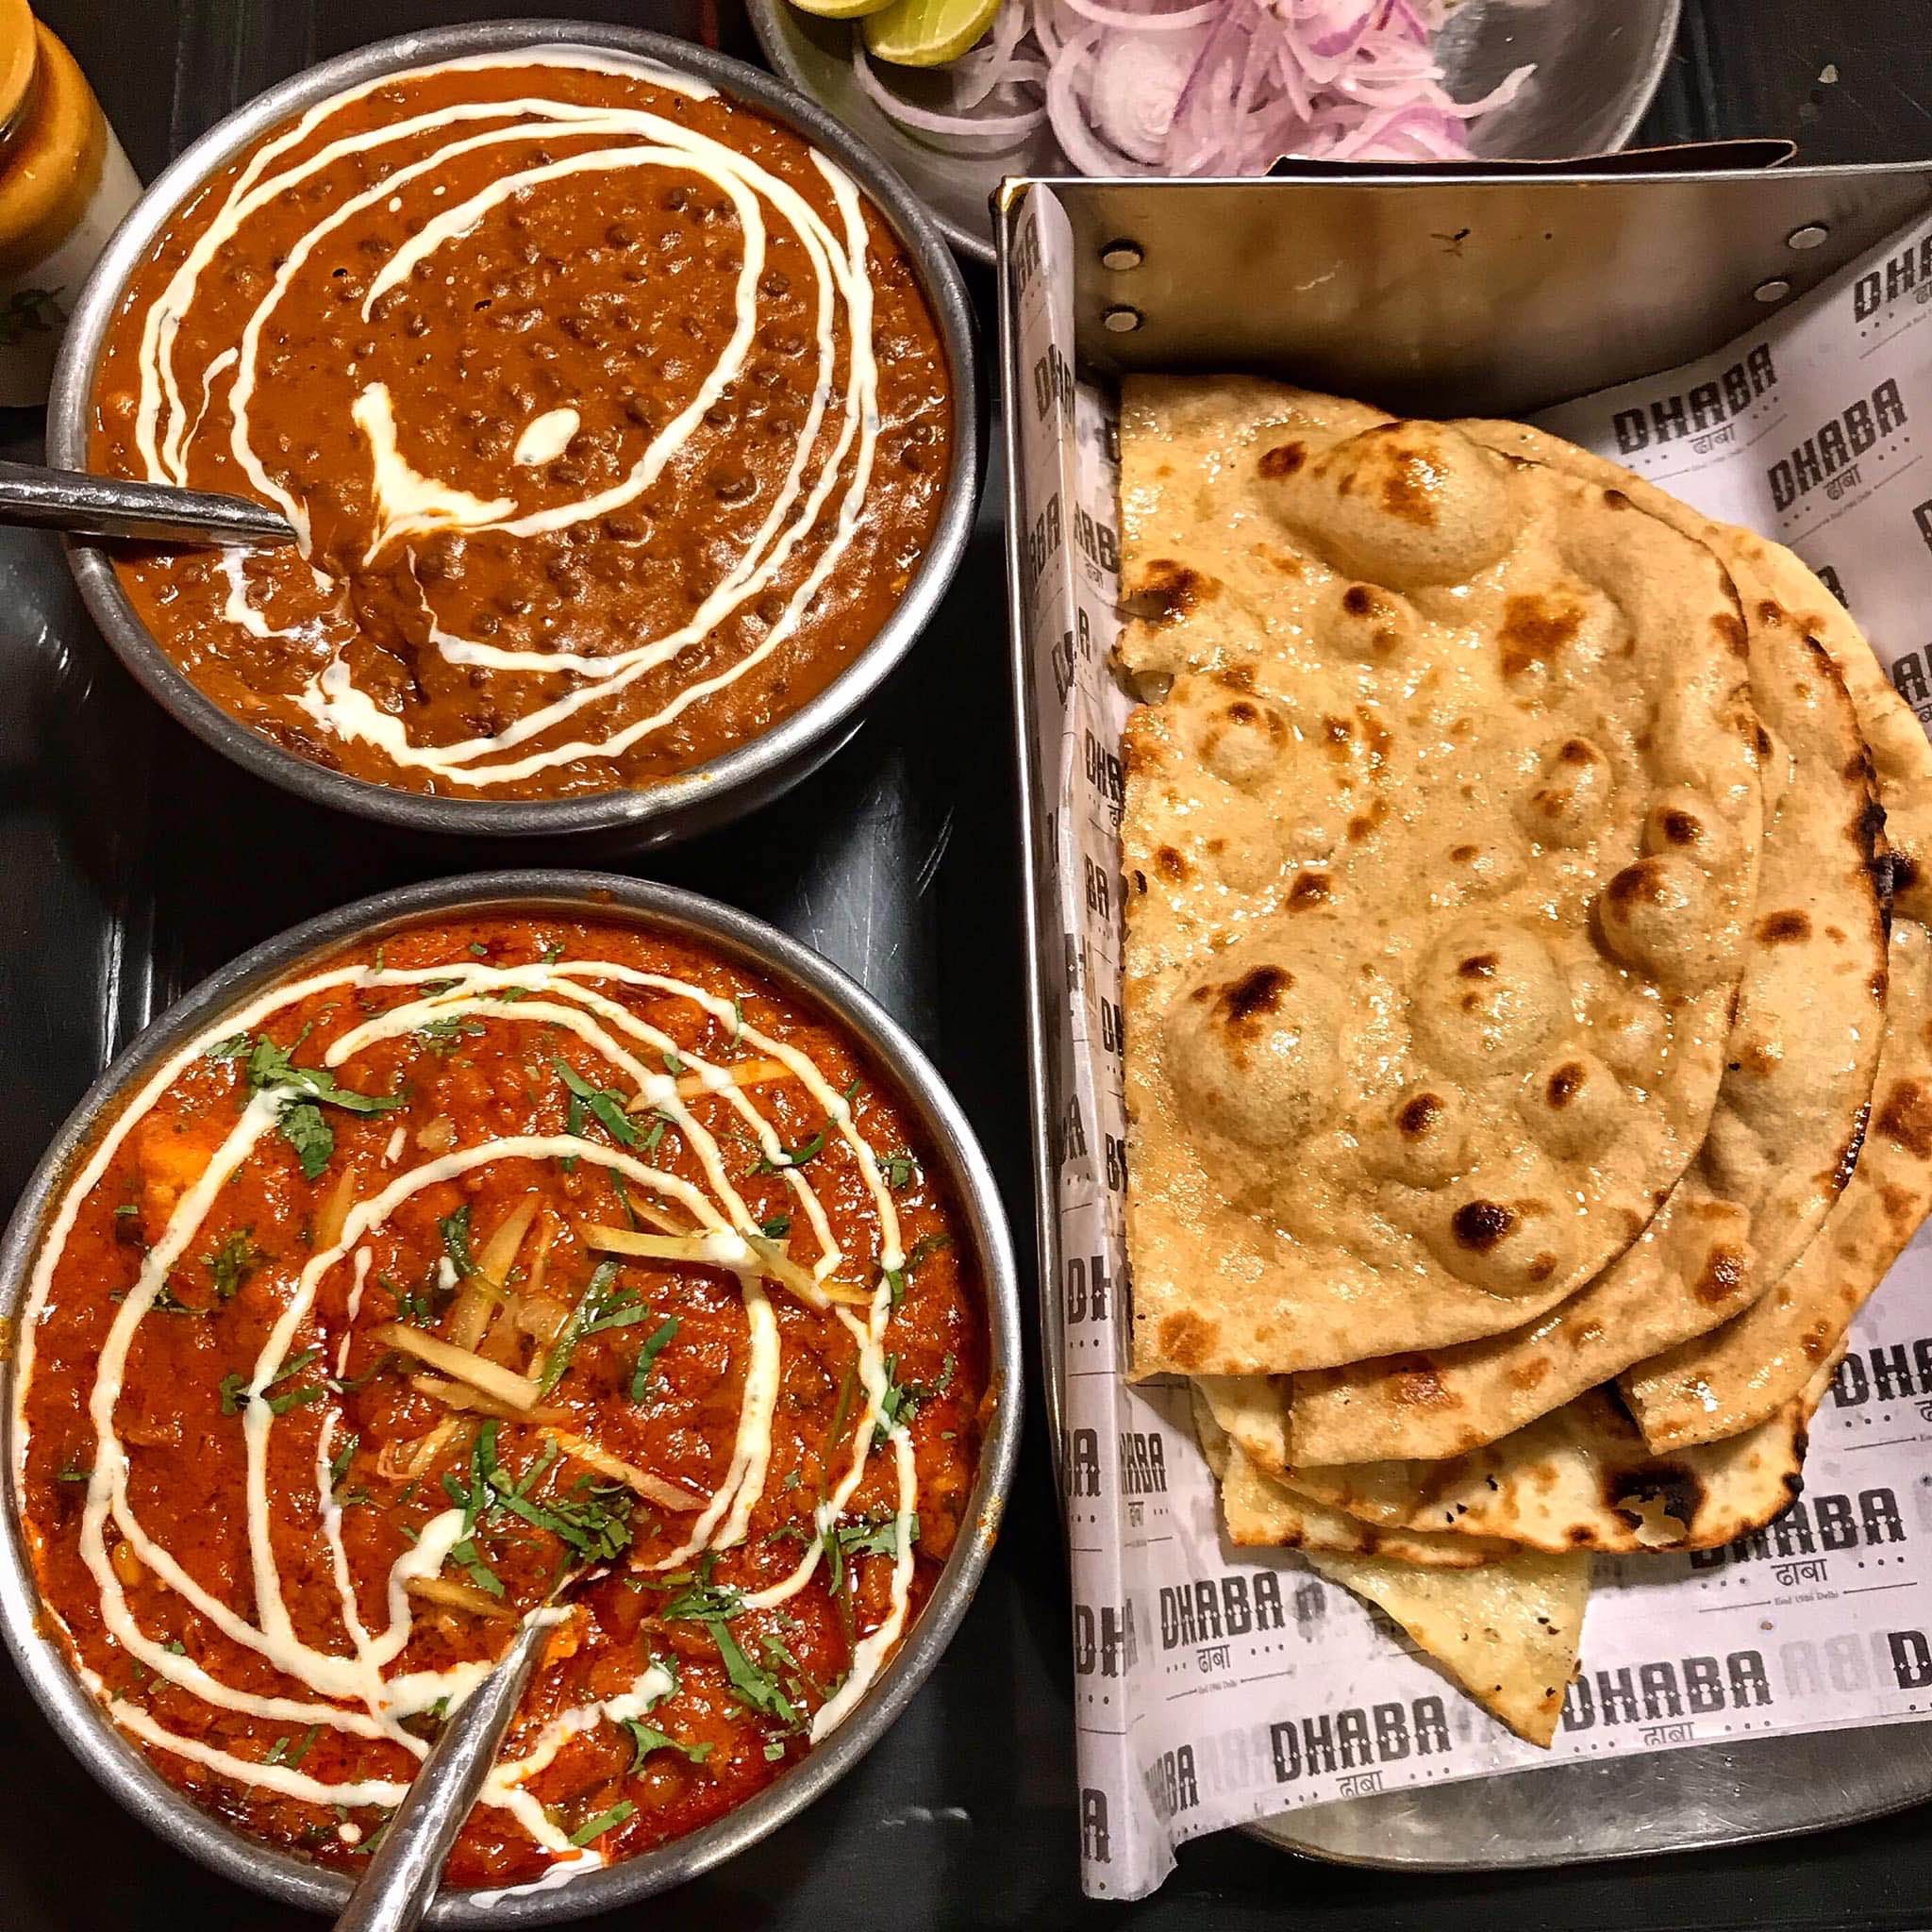 Dish,Food,Cuisine,Naan,Ingredient,Roti,Paratha,Flatbread,Chapati,Produce